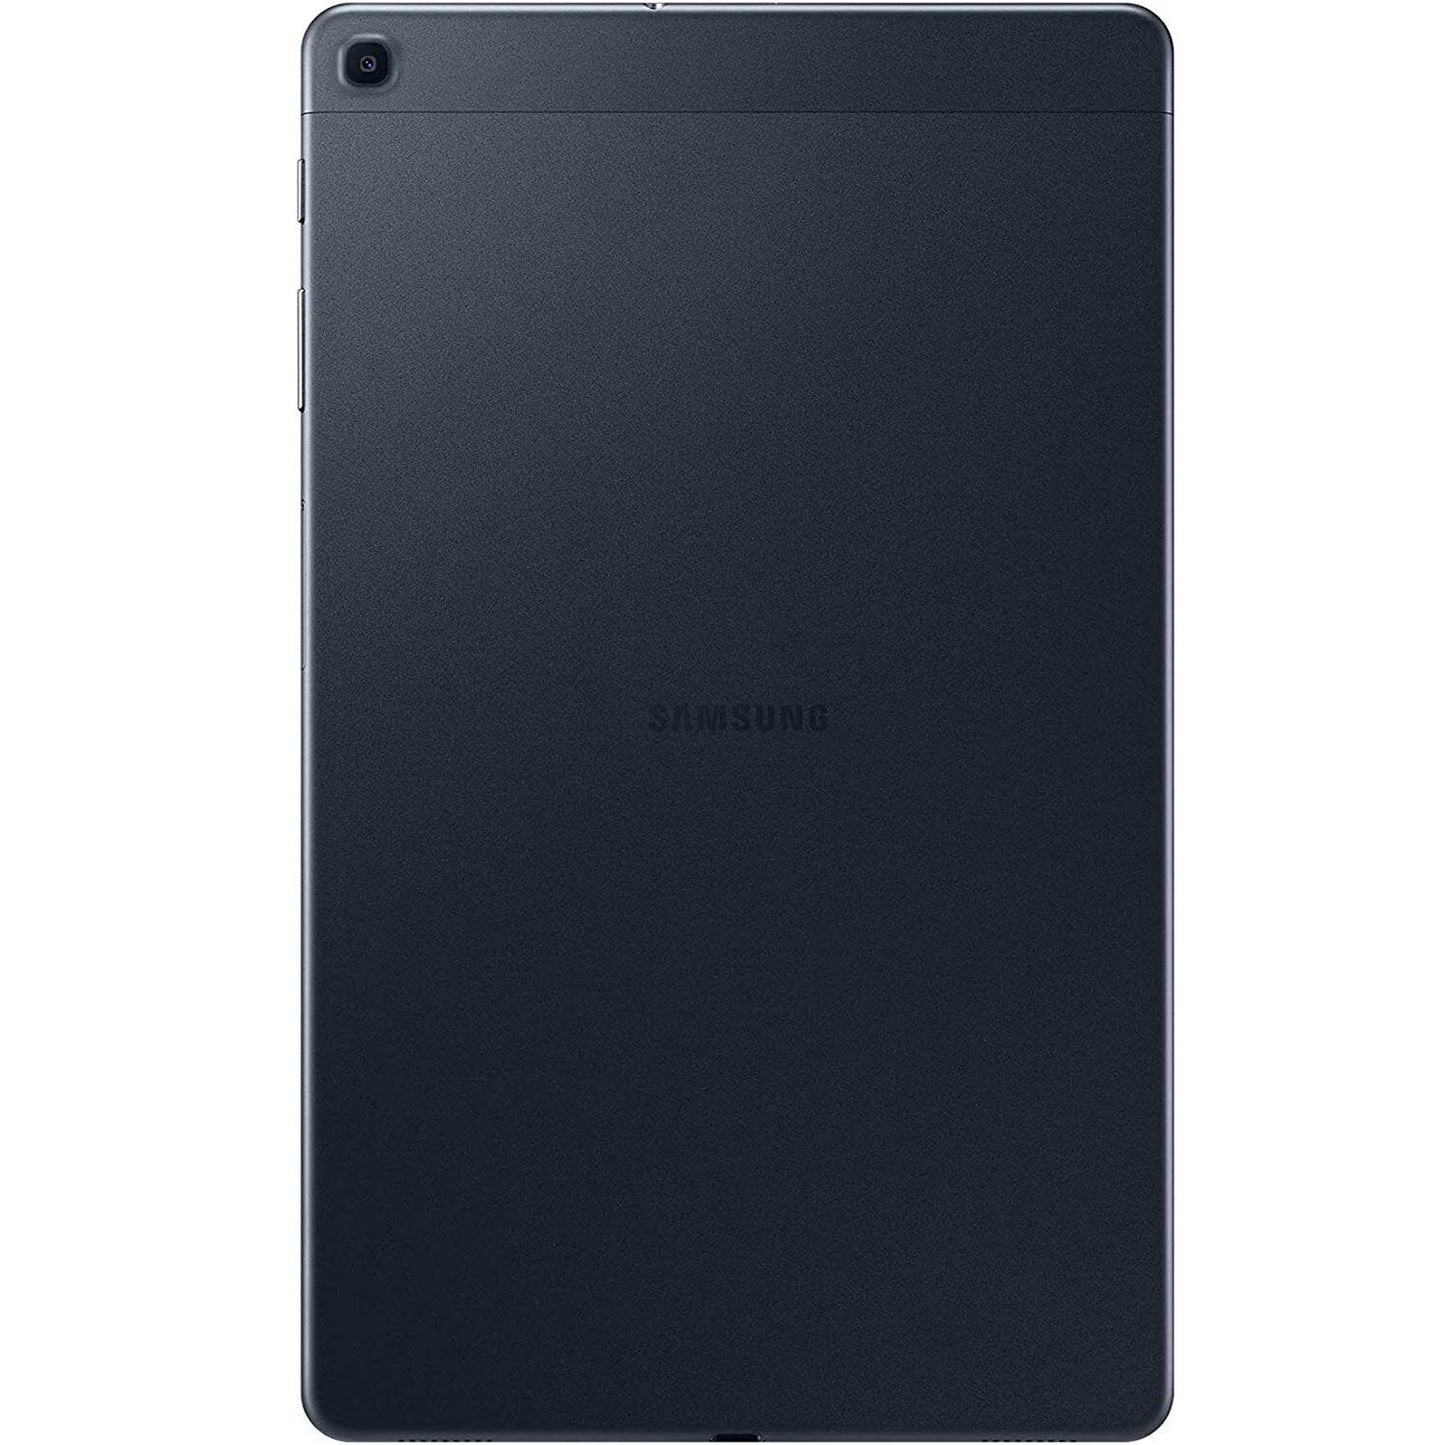 Samsung Galaxy Tab A 10.1" 32GB Wi-Fi Android Tablet Black SM-T510